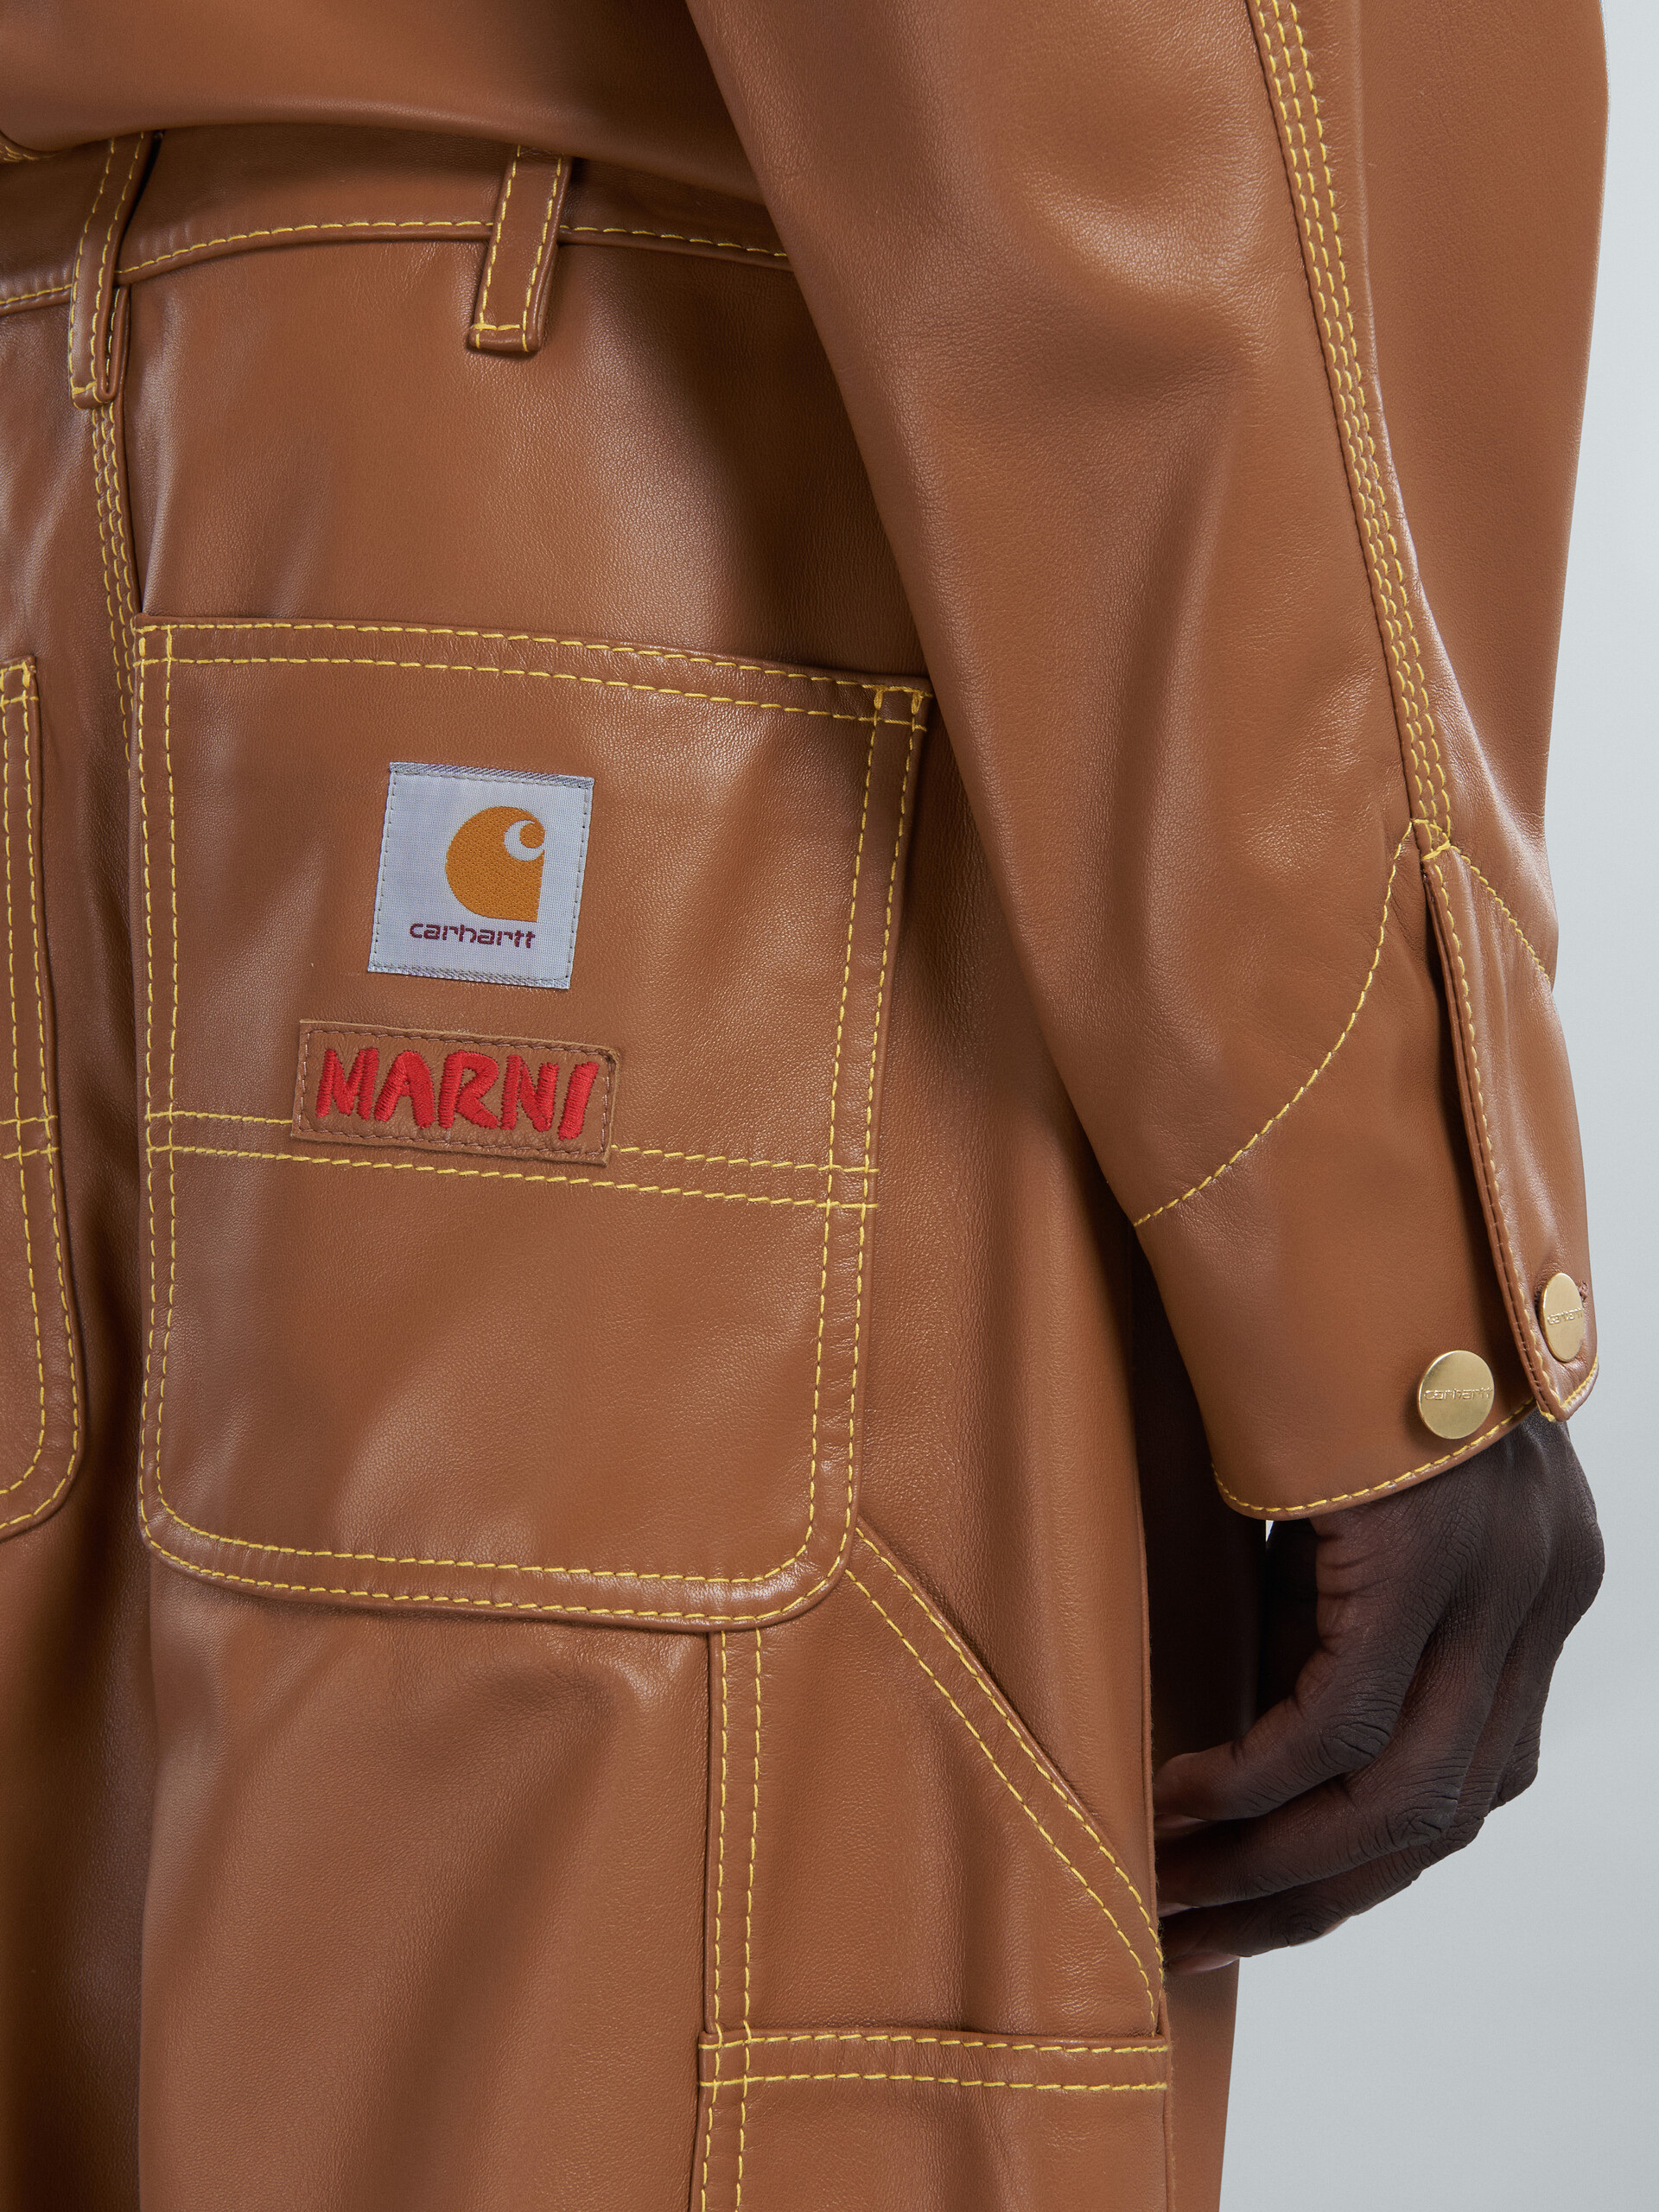 MARNI x CARHARTT WIP - brown leather trousers - Pants - Image 4